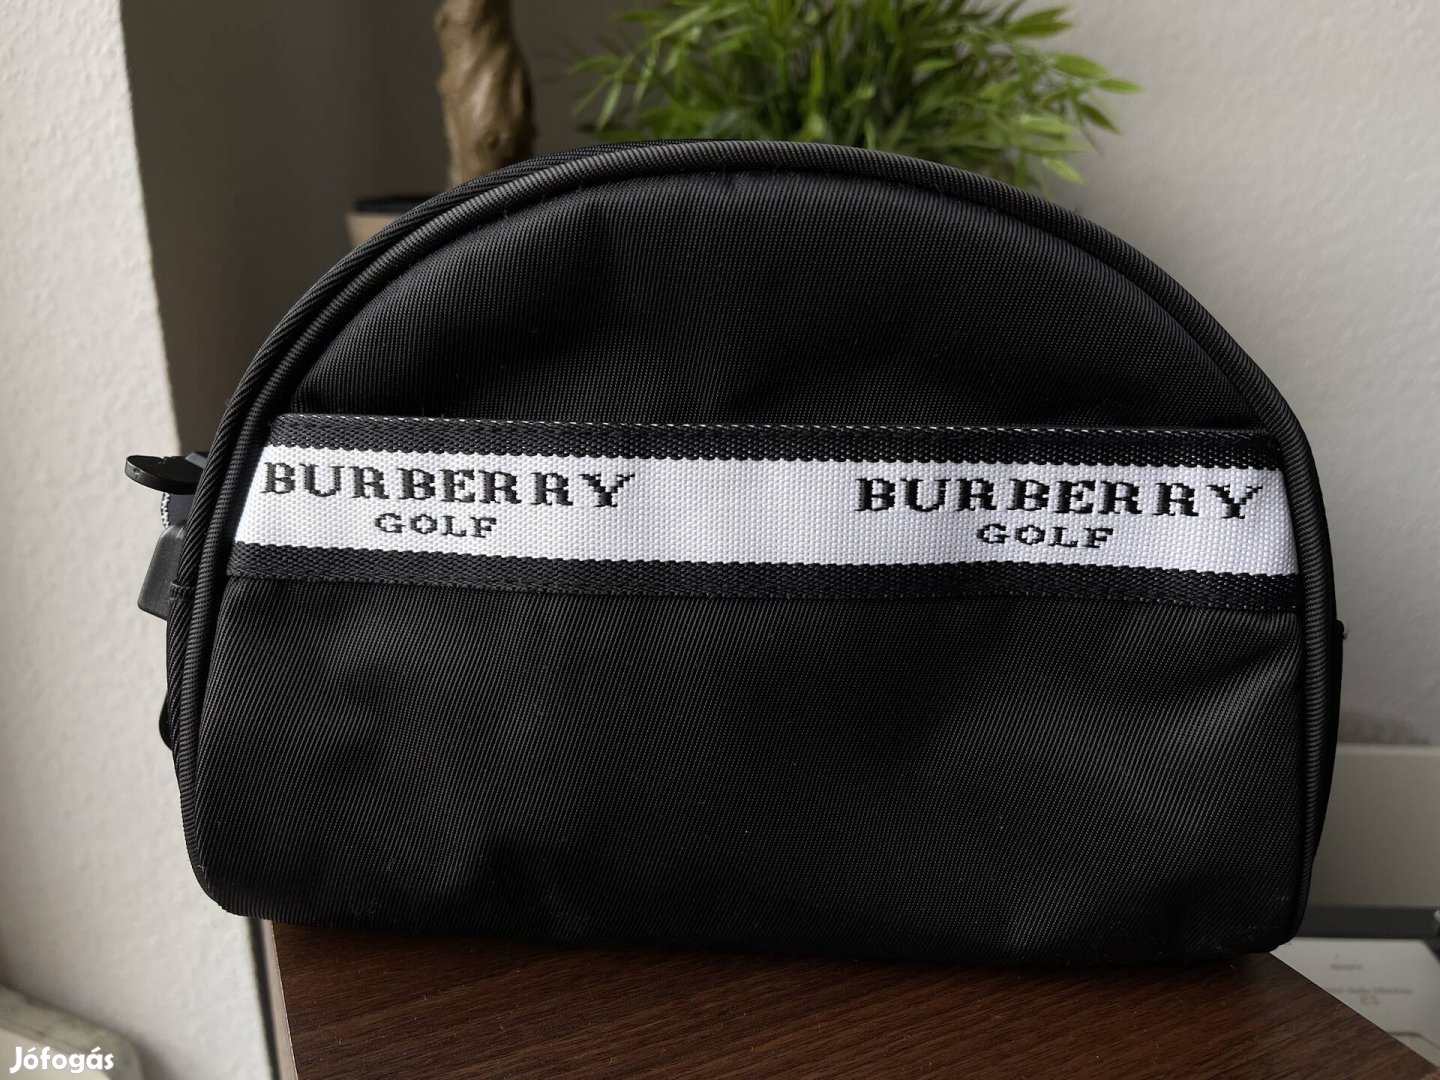 Burberry Golf pipere táska 